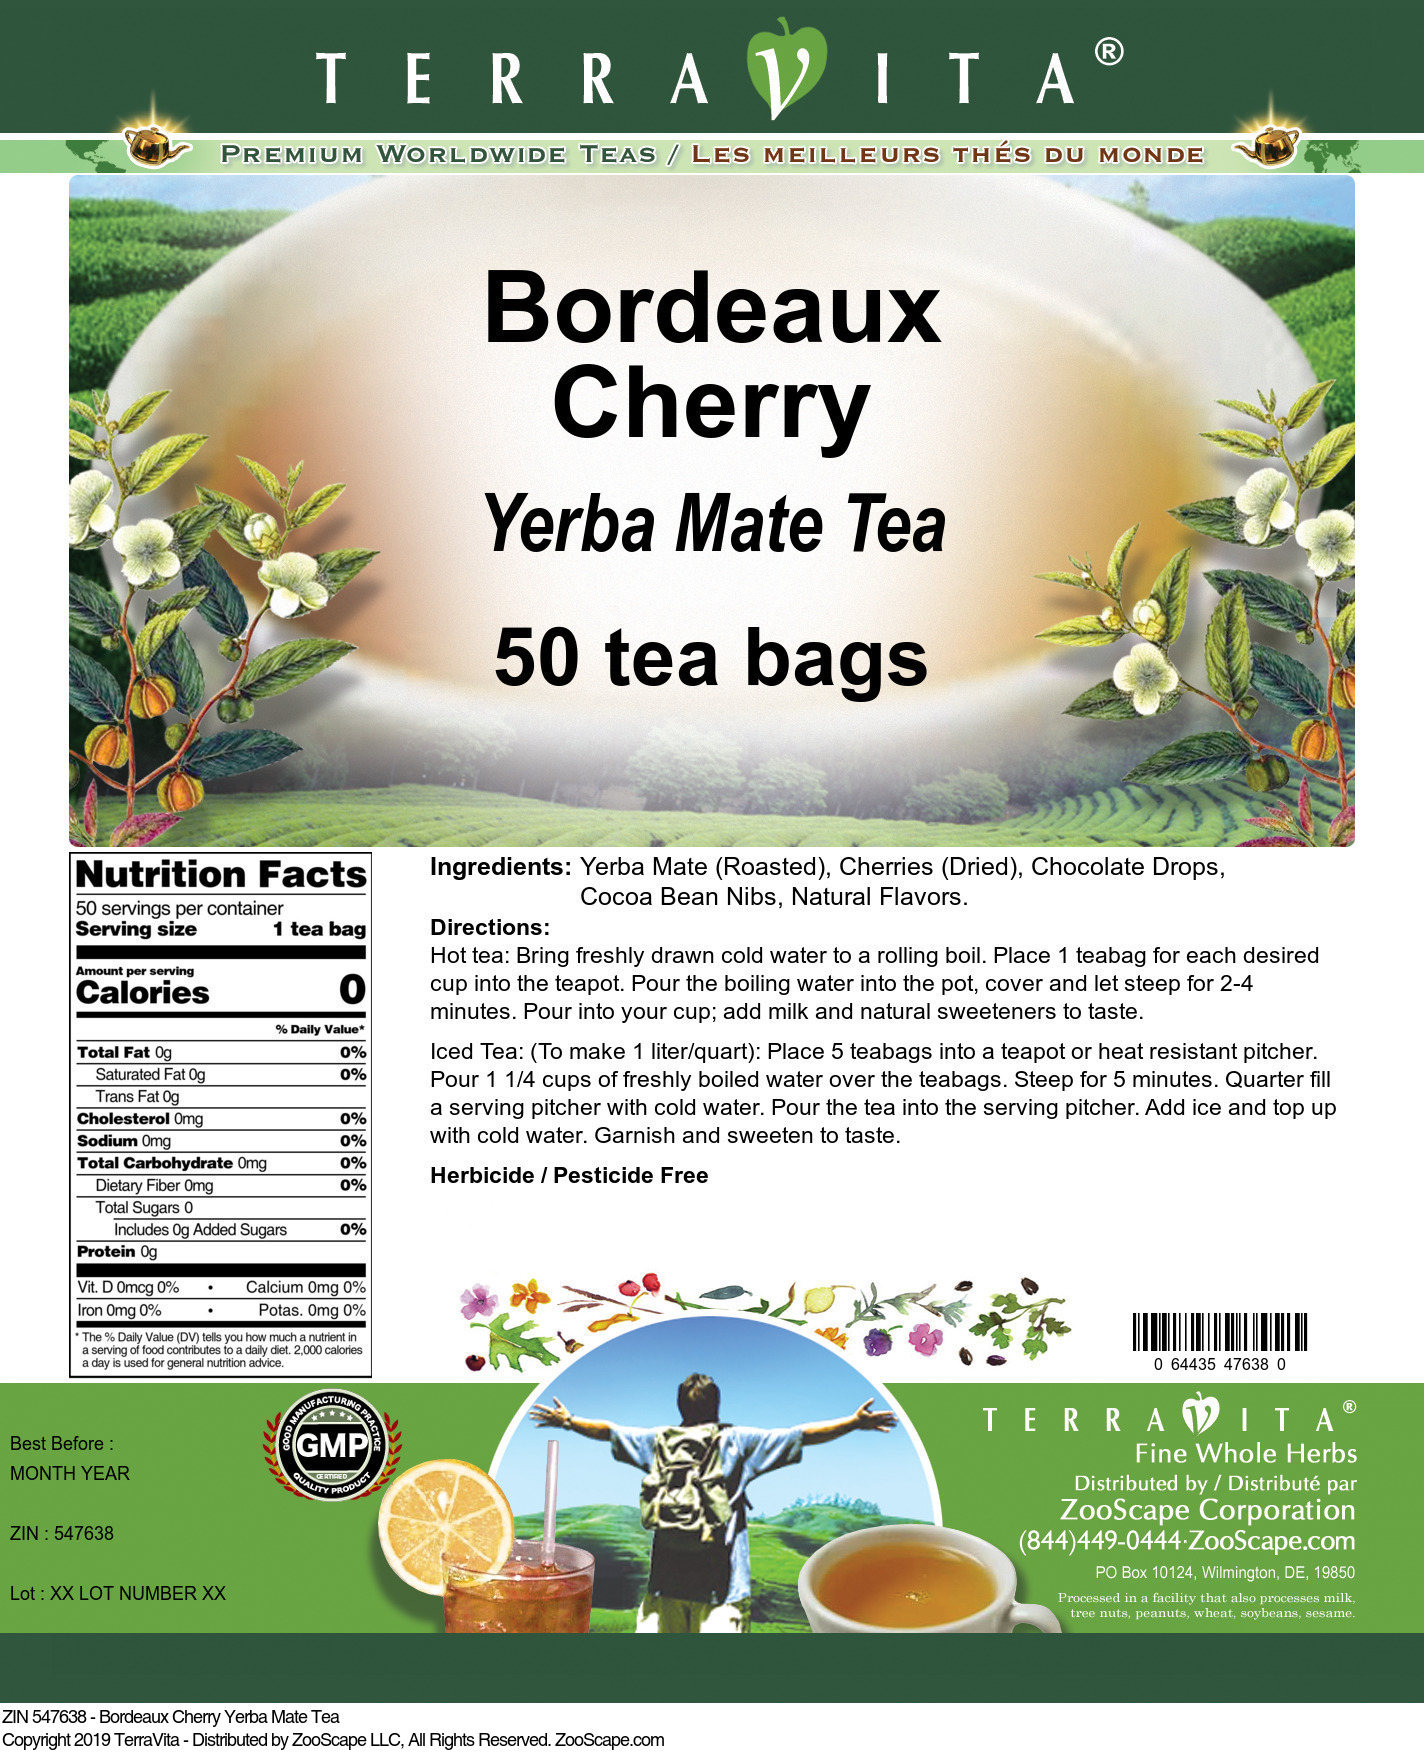 Bordeaux Cherry Yerba Mate Tea - Label